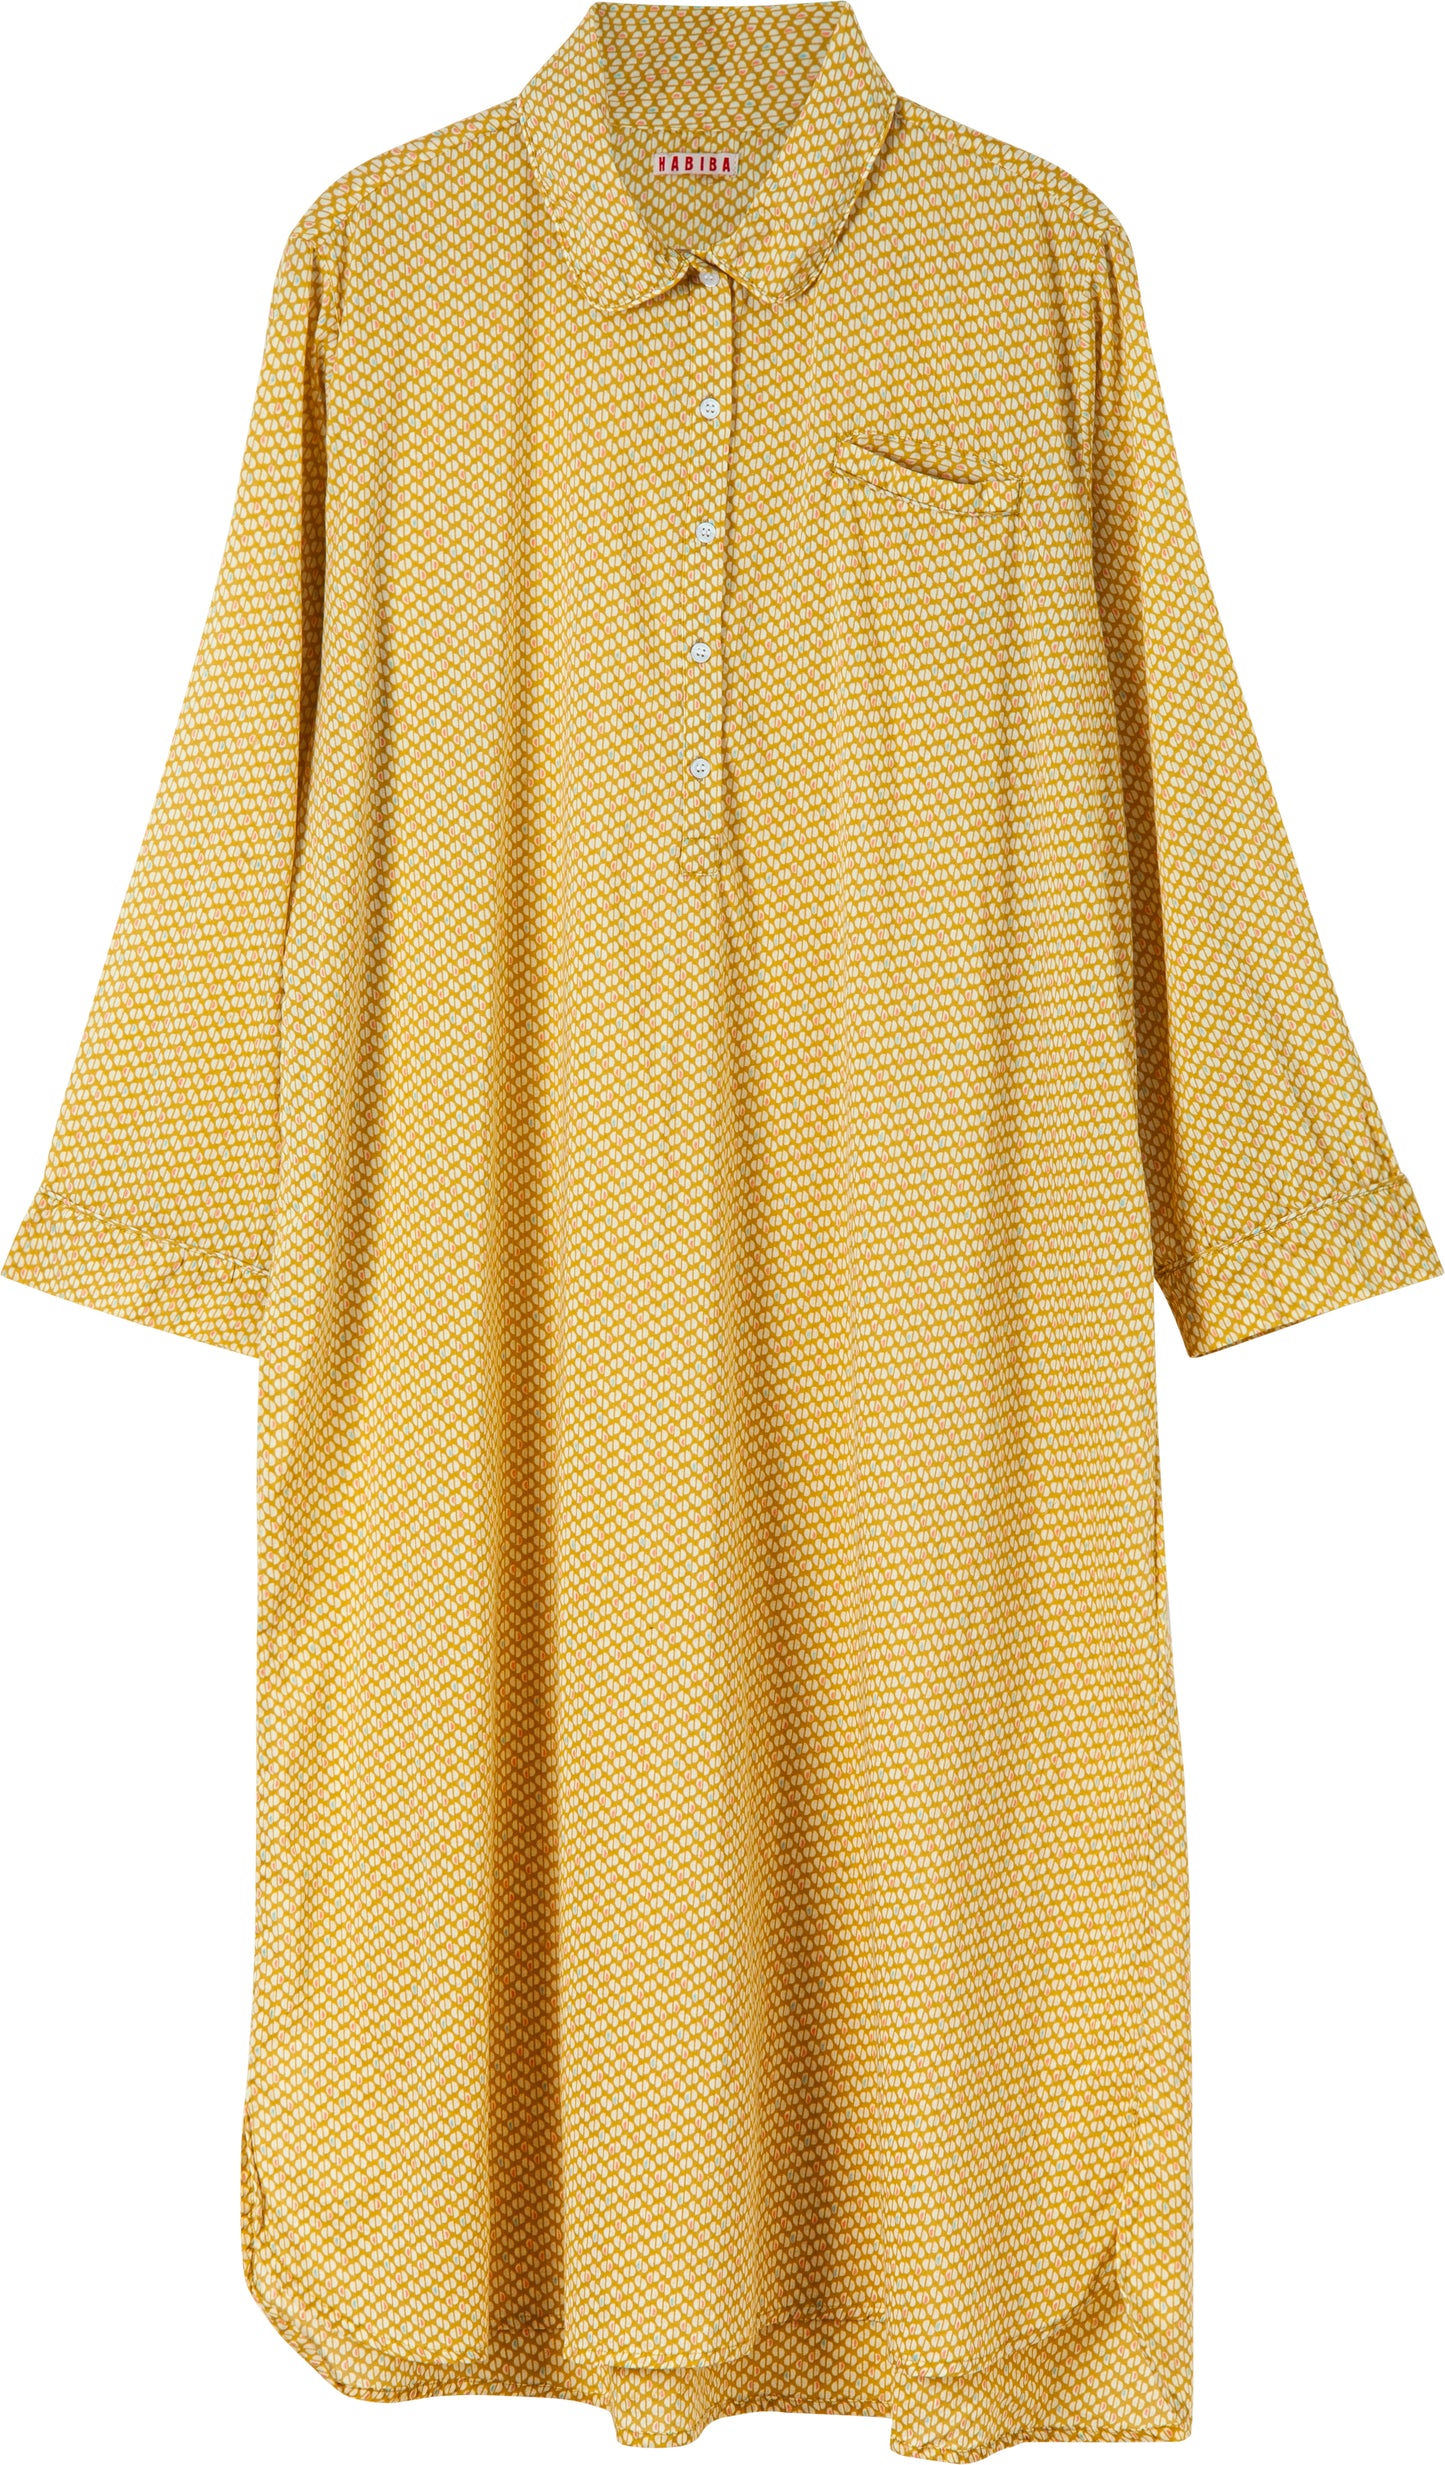 habiba kyoto shirtdress yellow